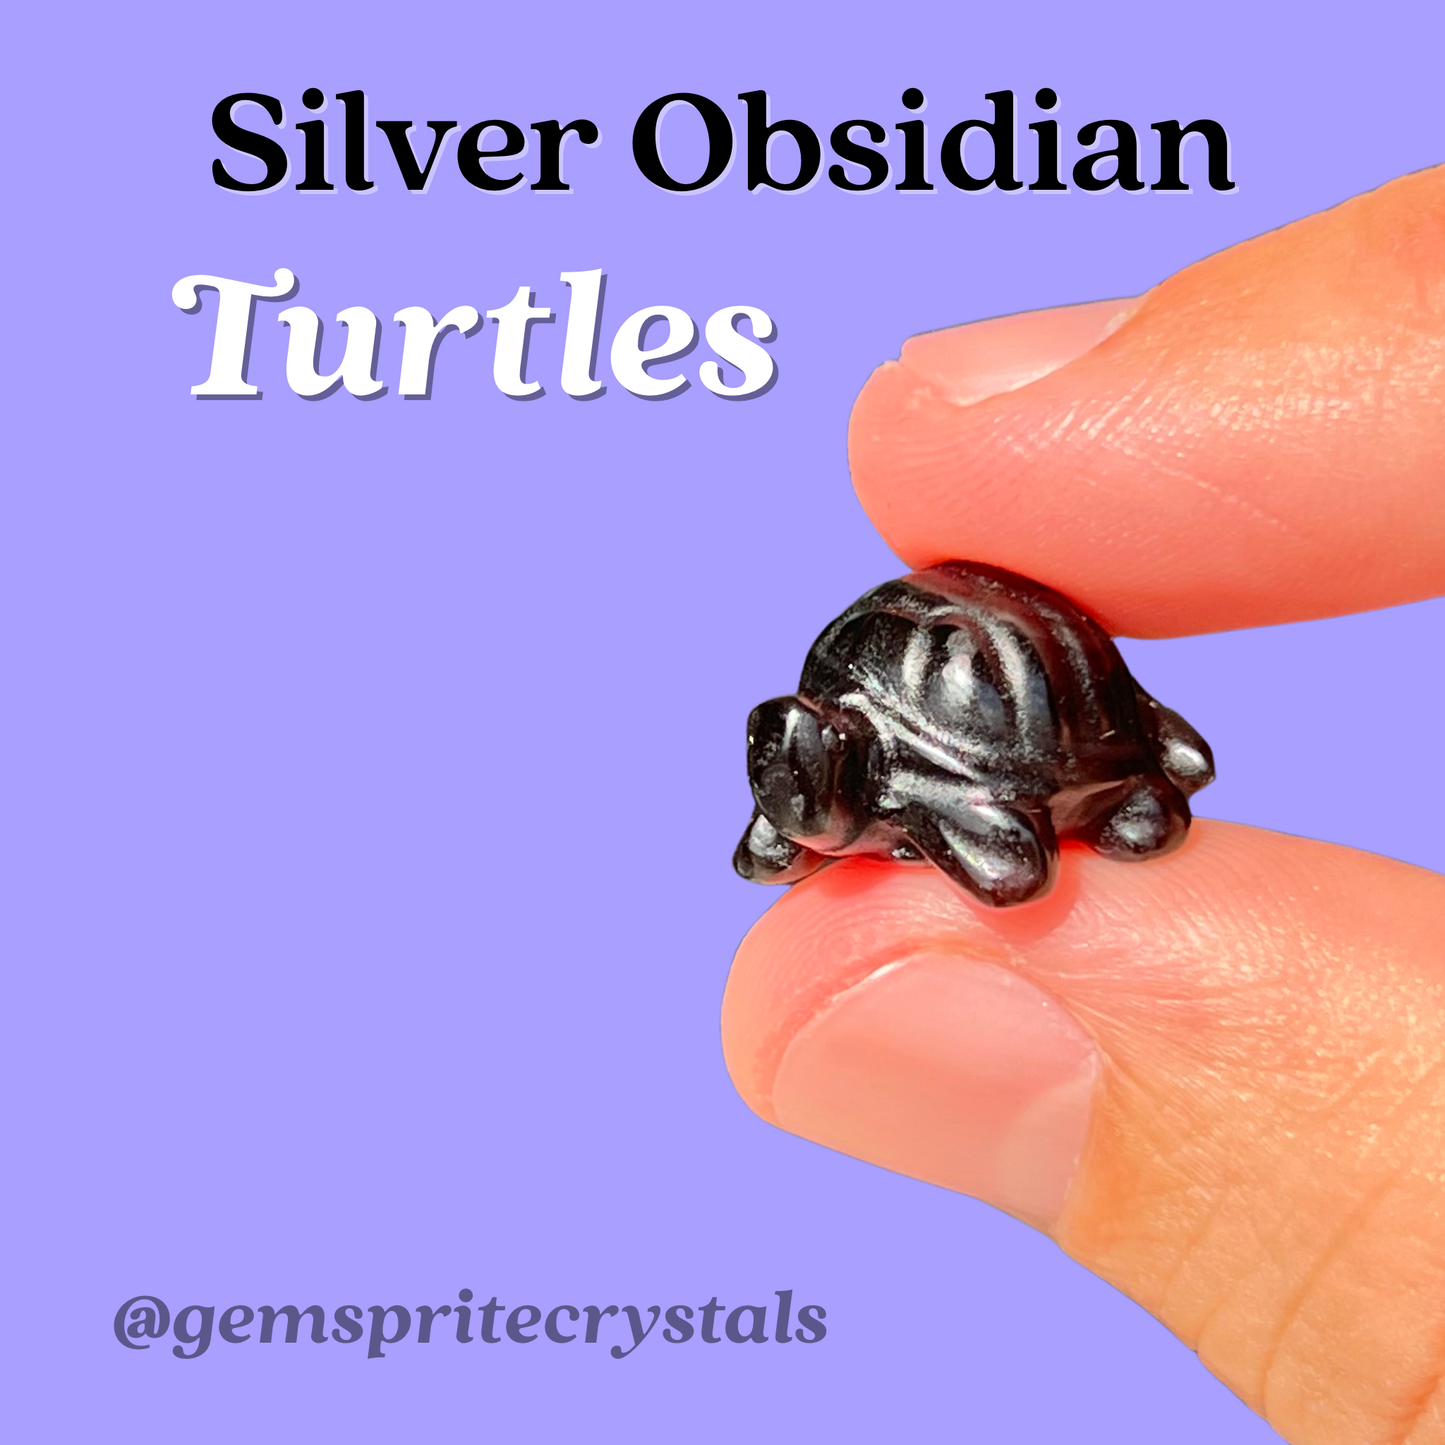 Silver Obsidian Turtles